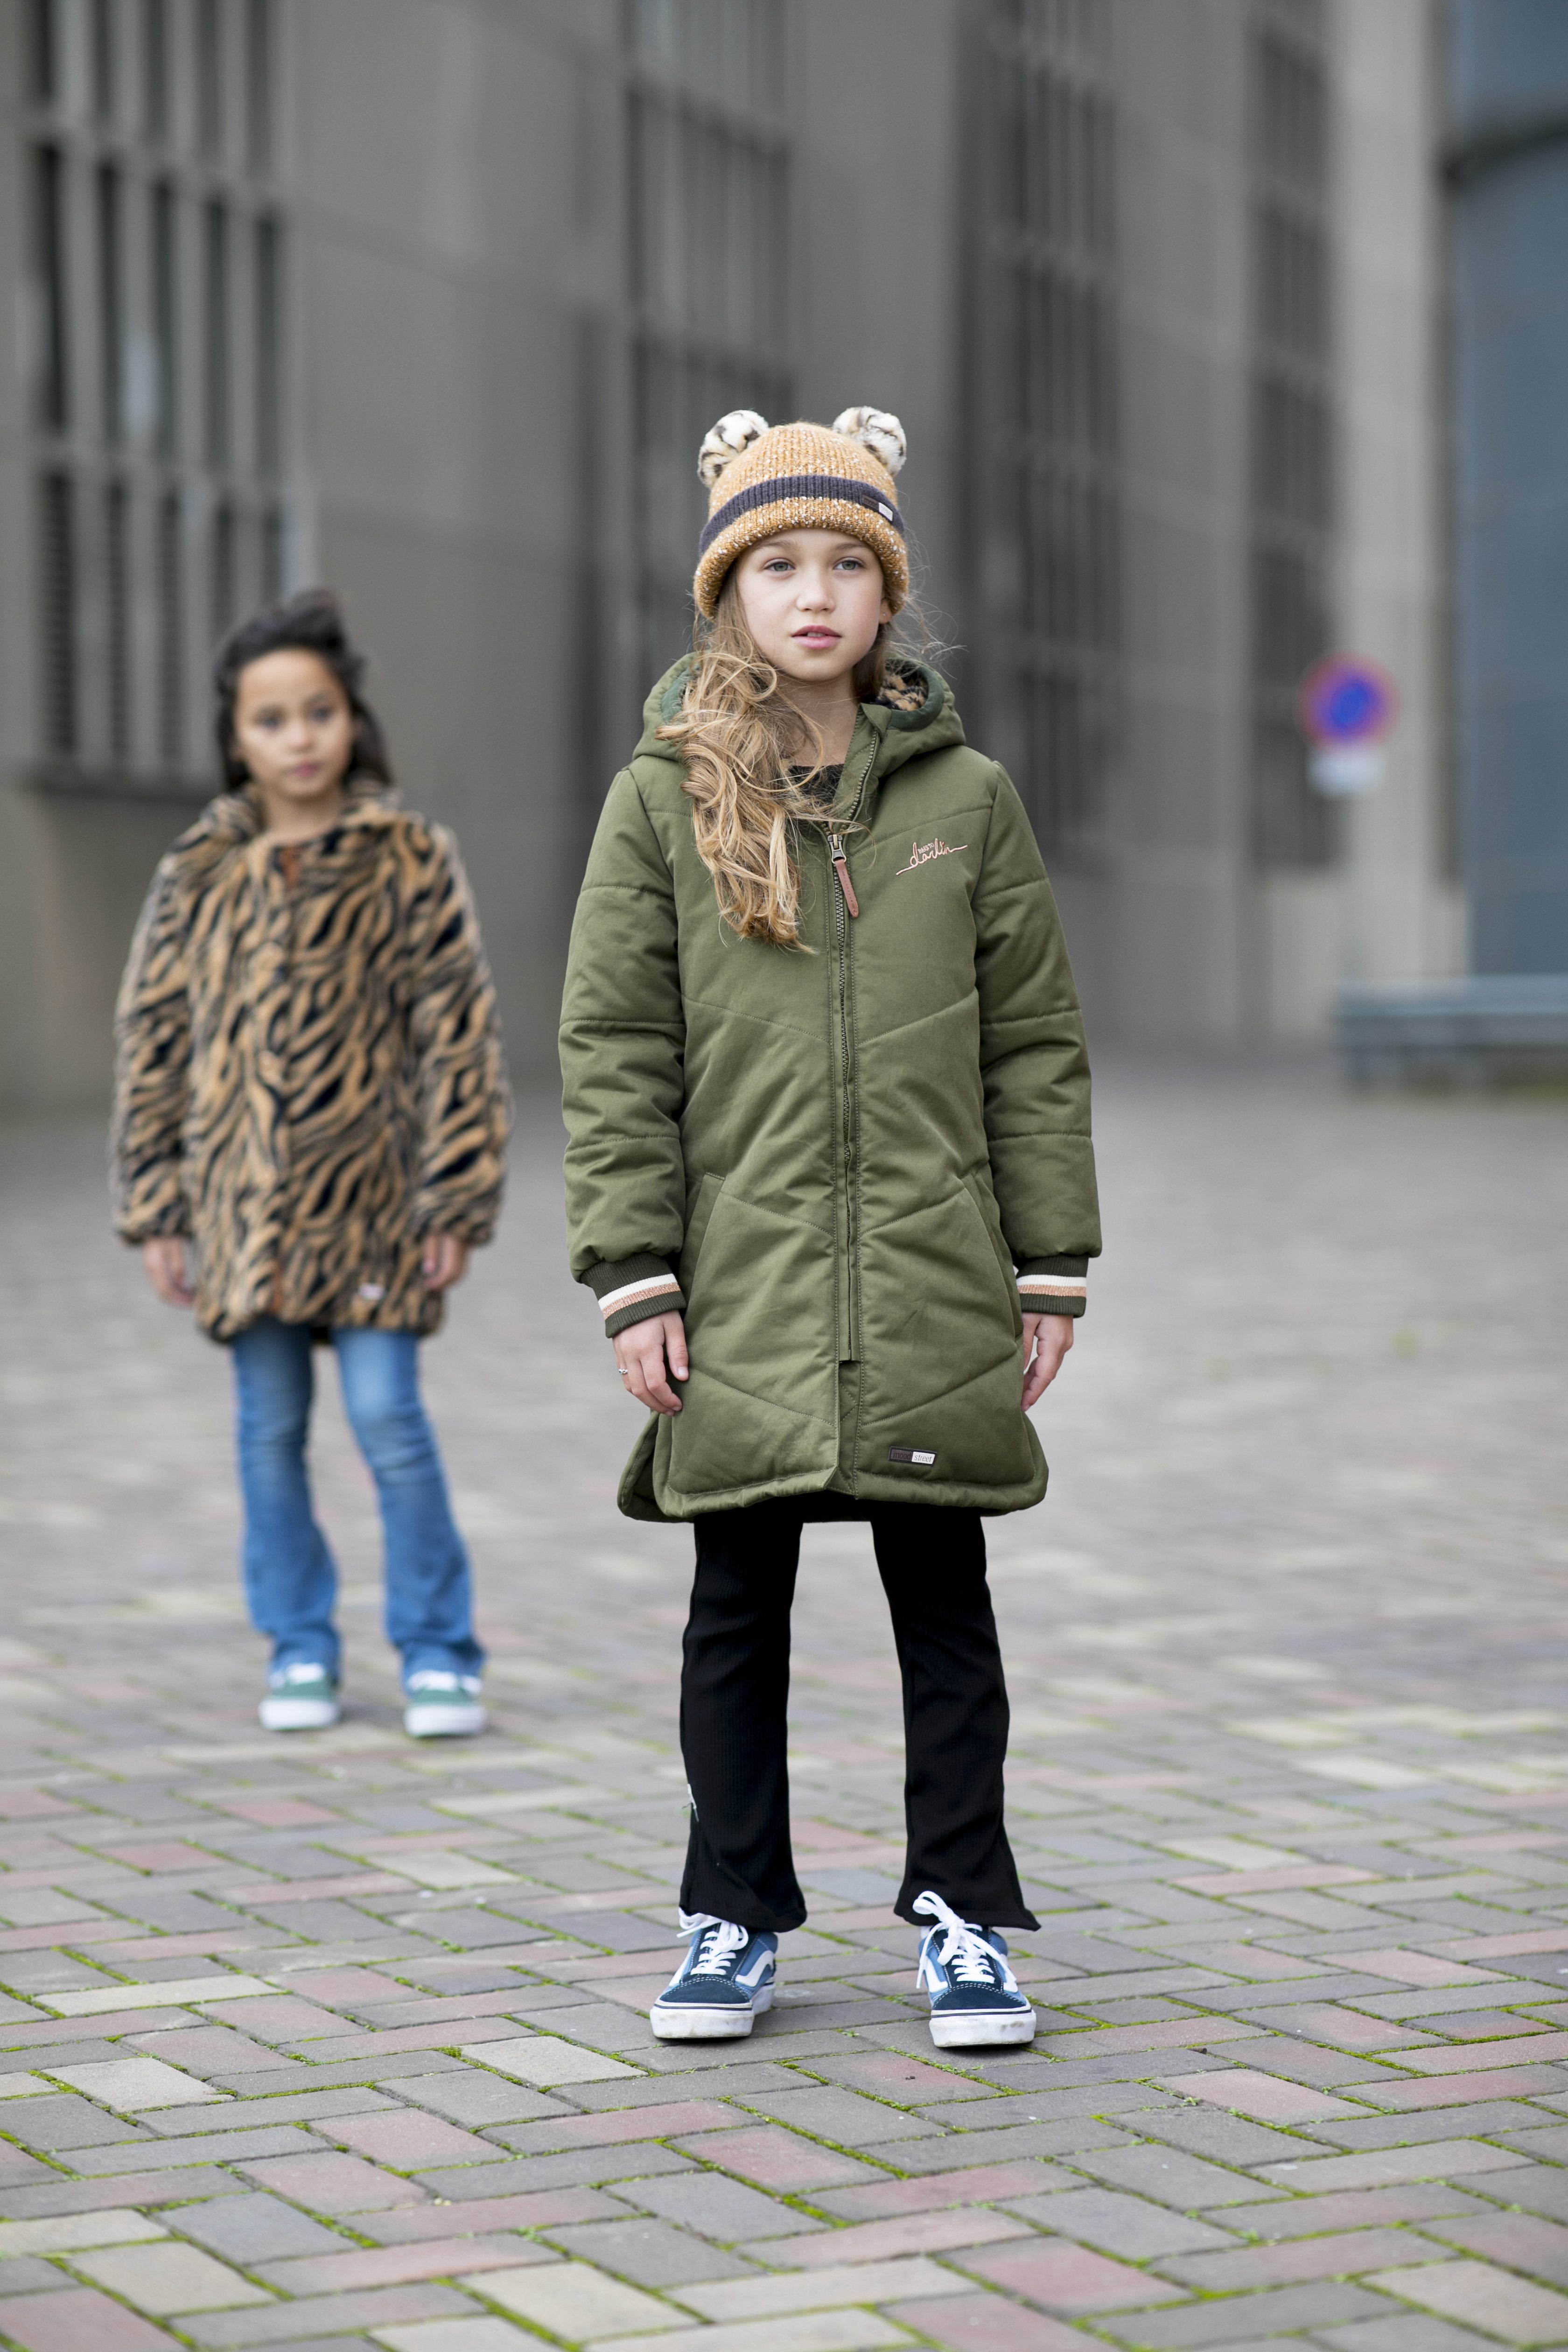 Meisjes MT long jacket van Moodstreet in de kleur Khaki in maat 146-152.